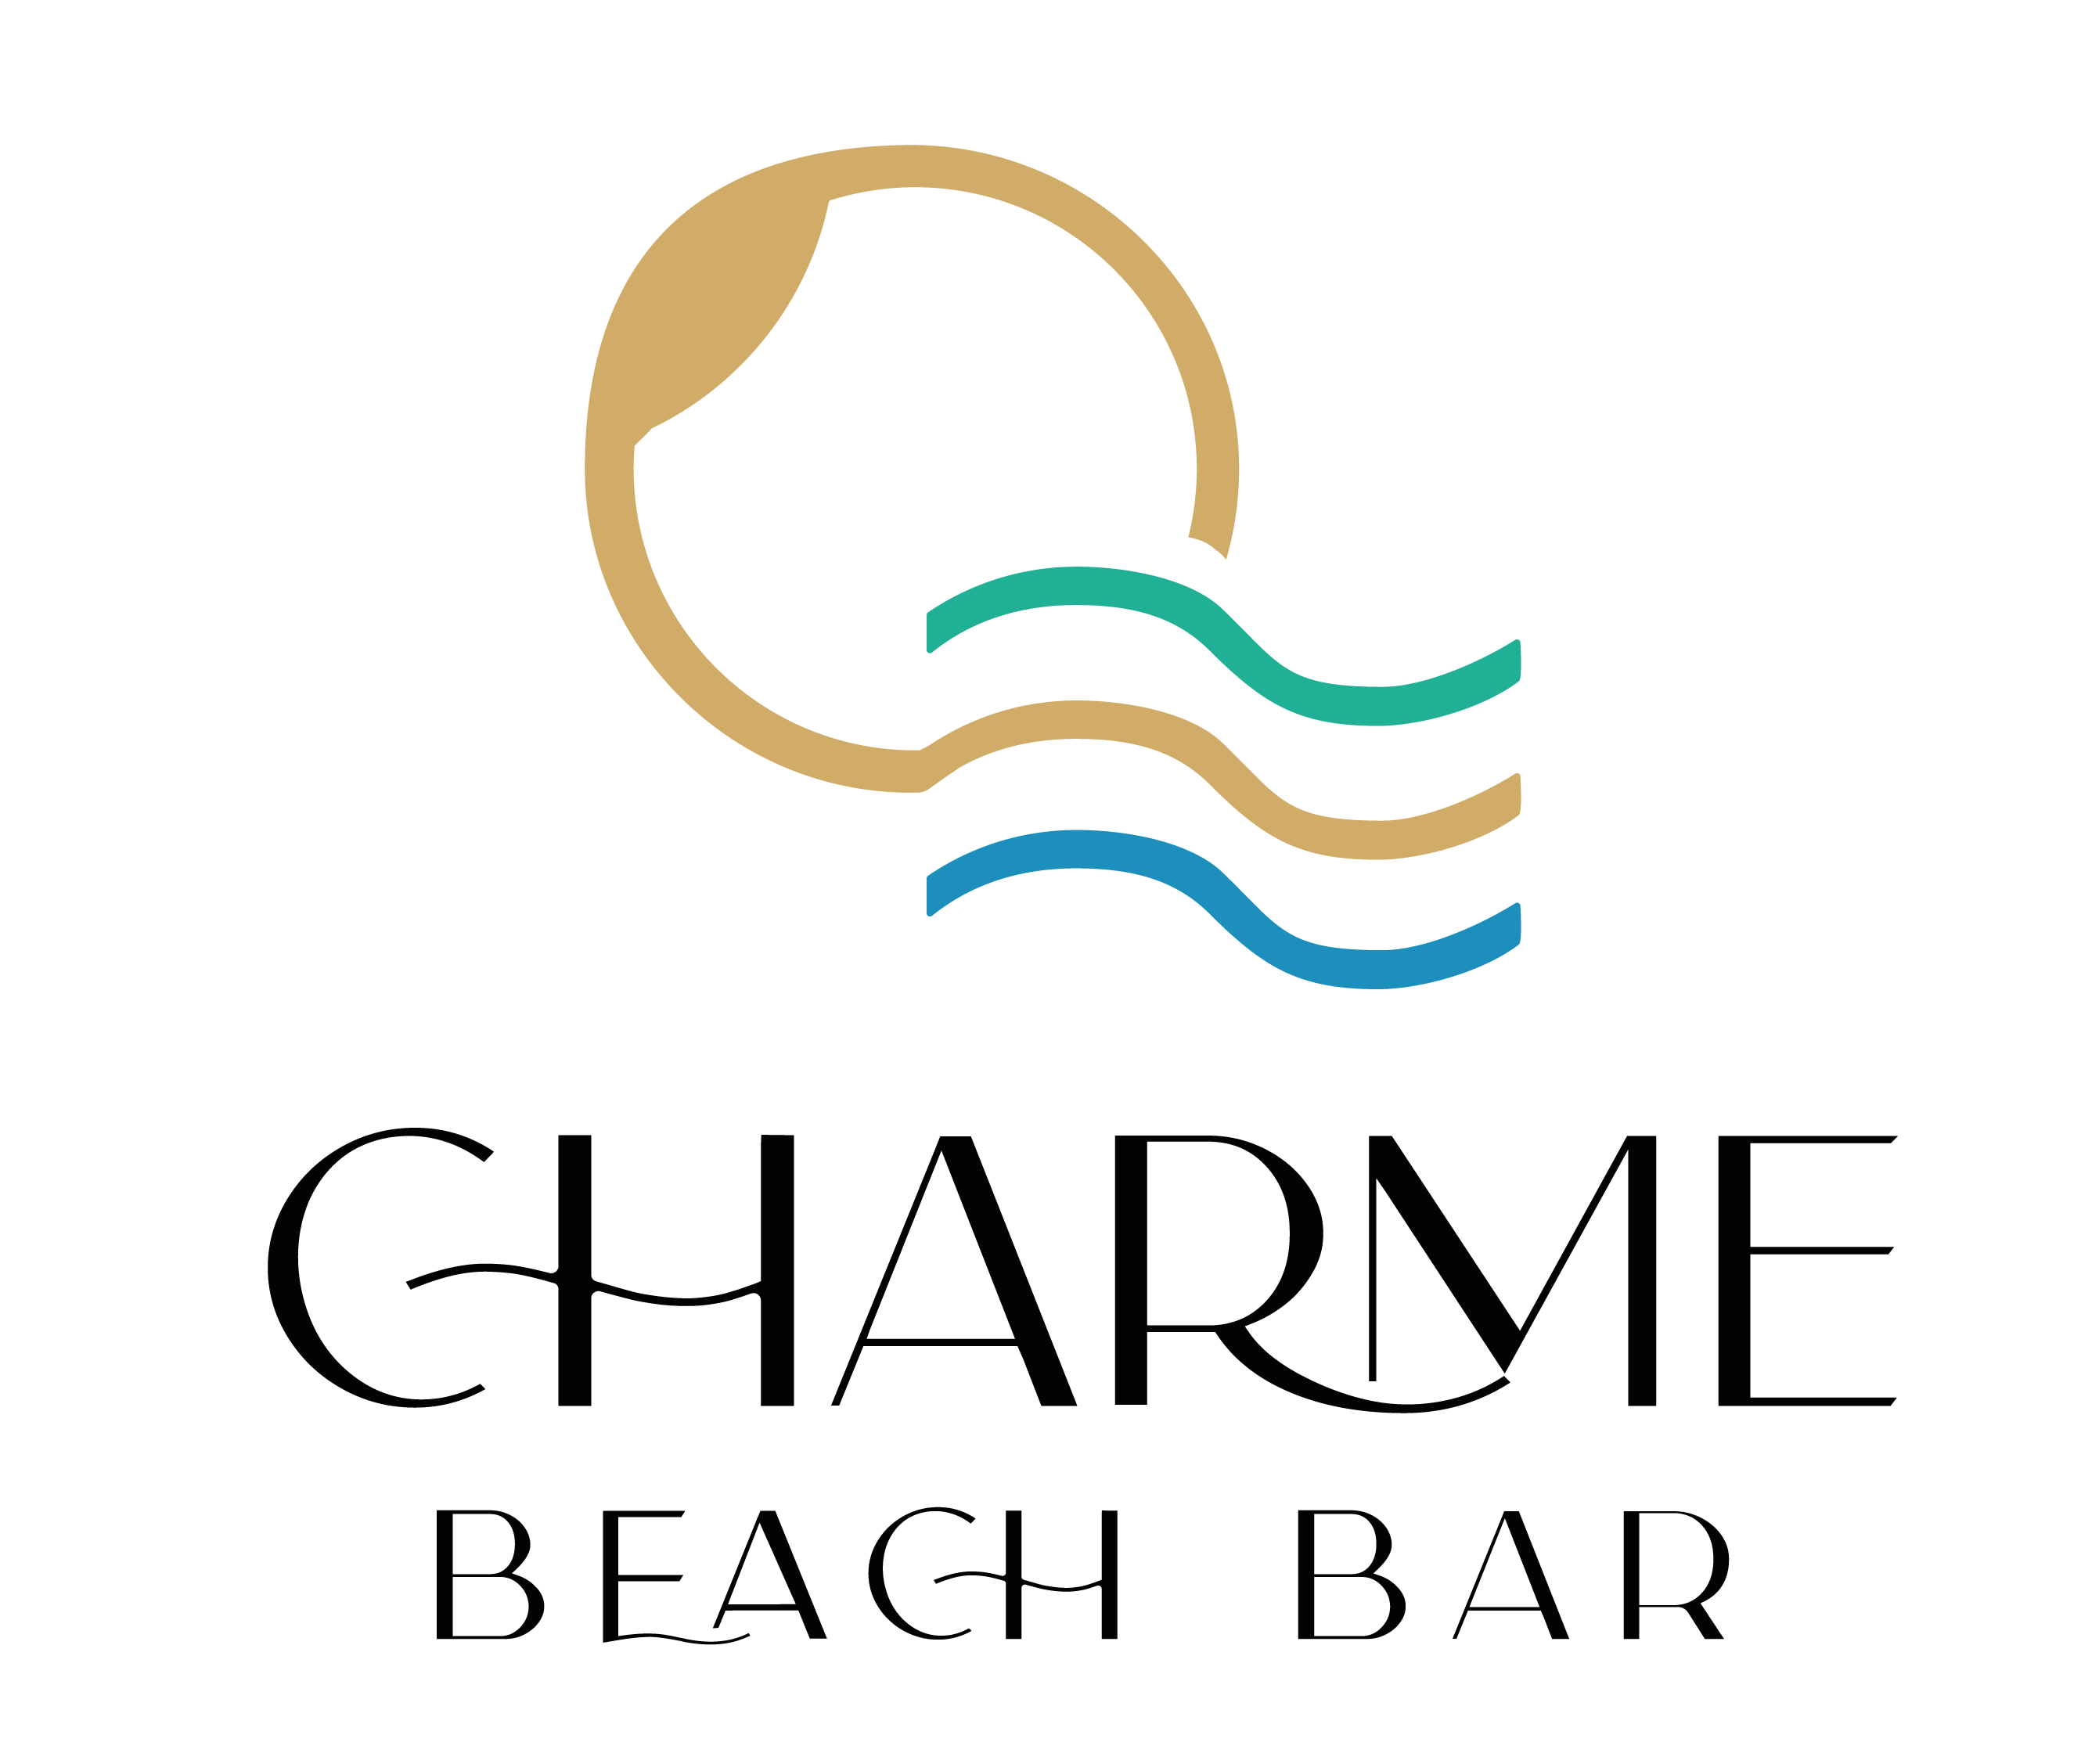 logo beach bar